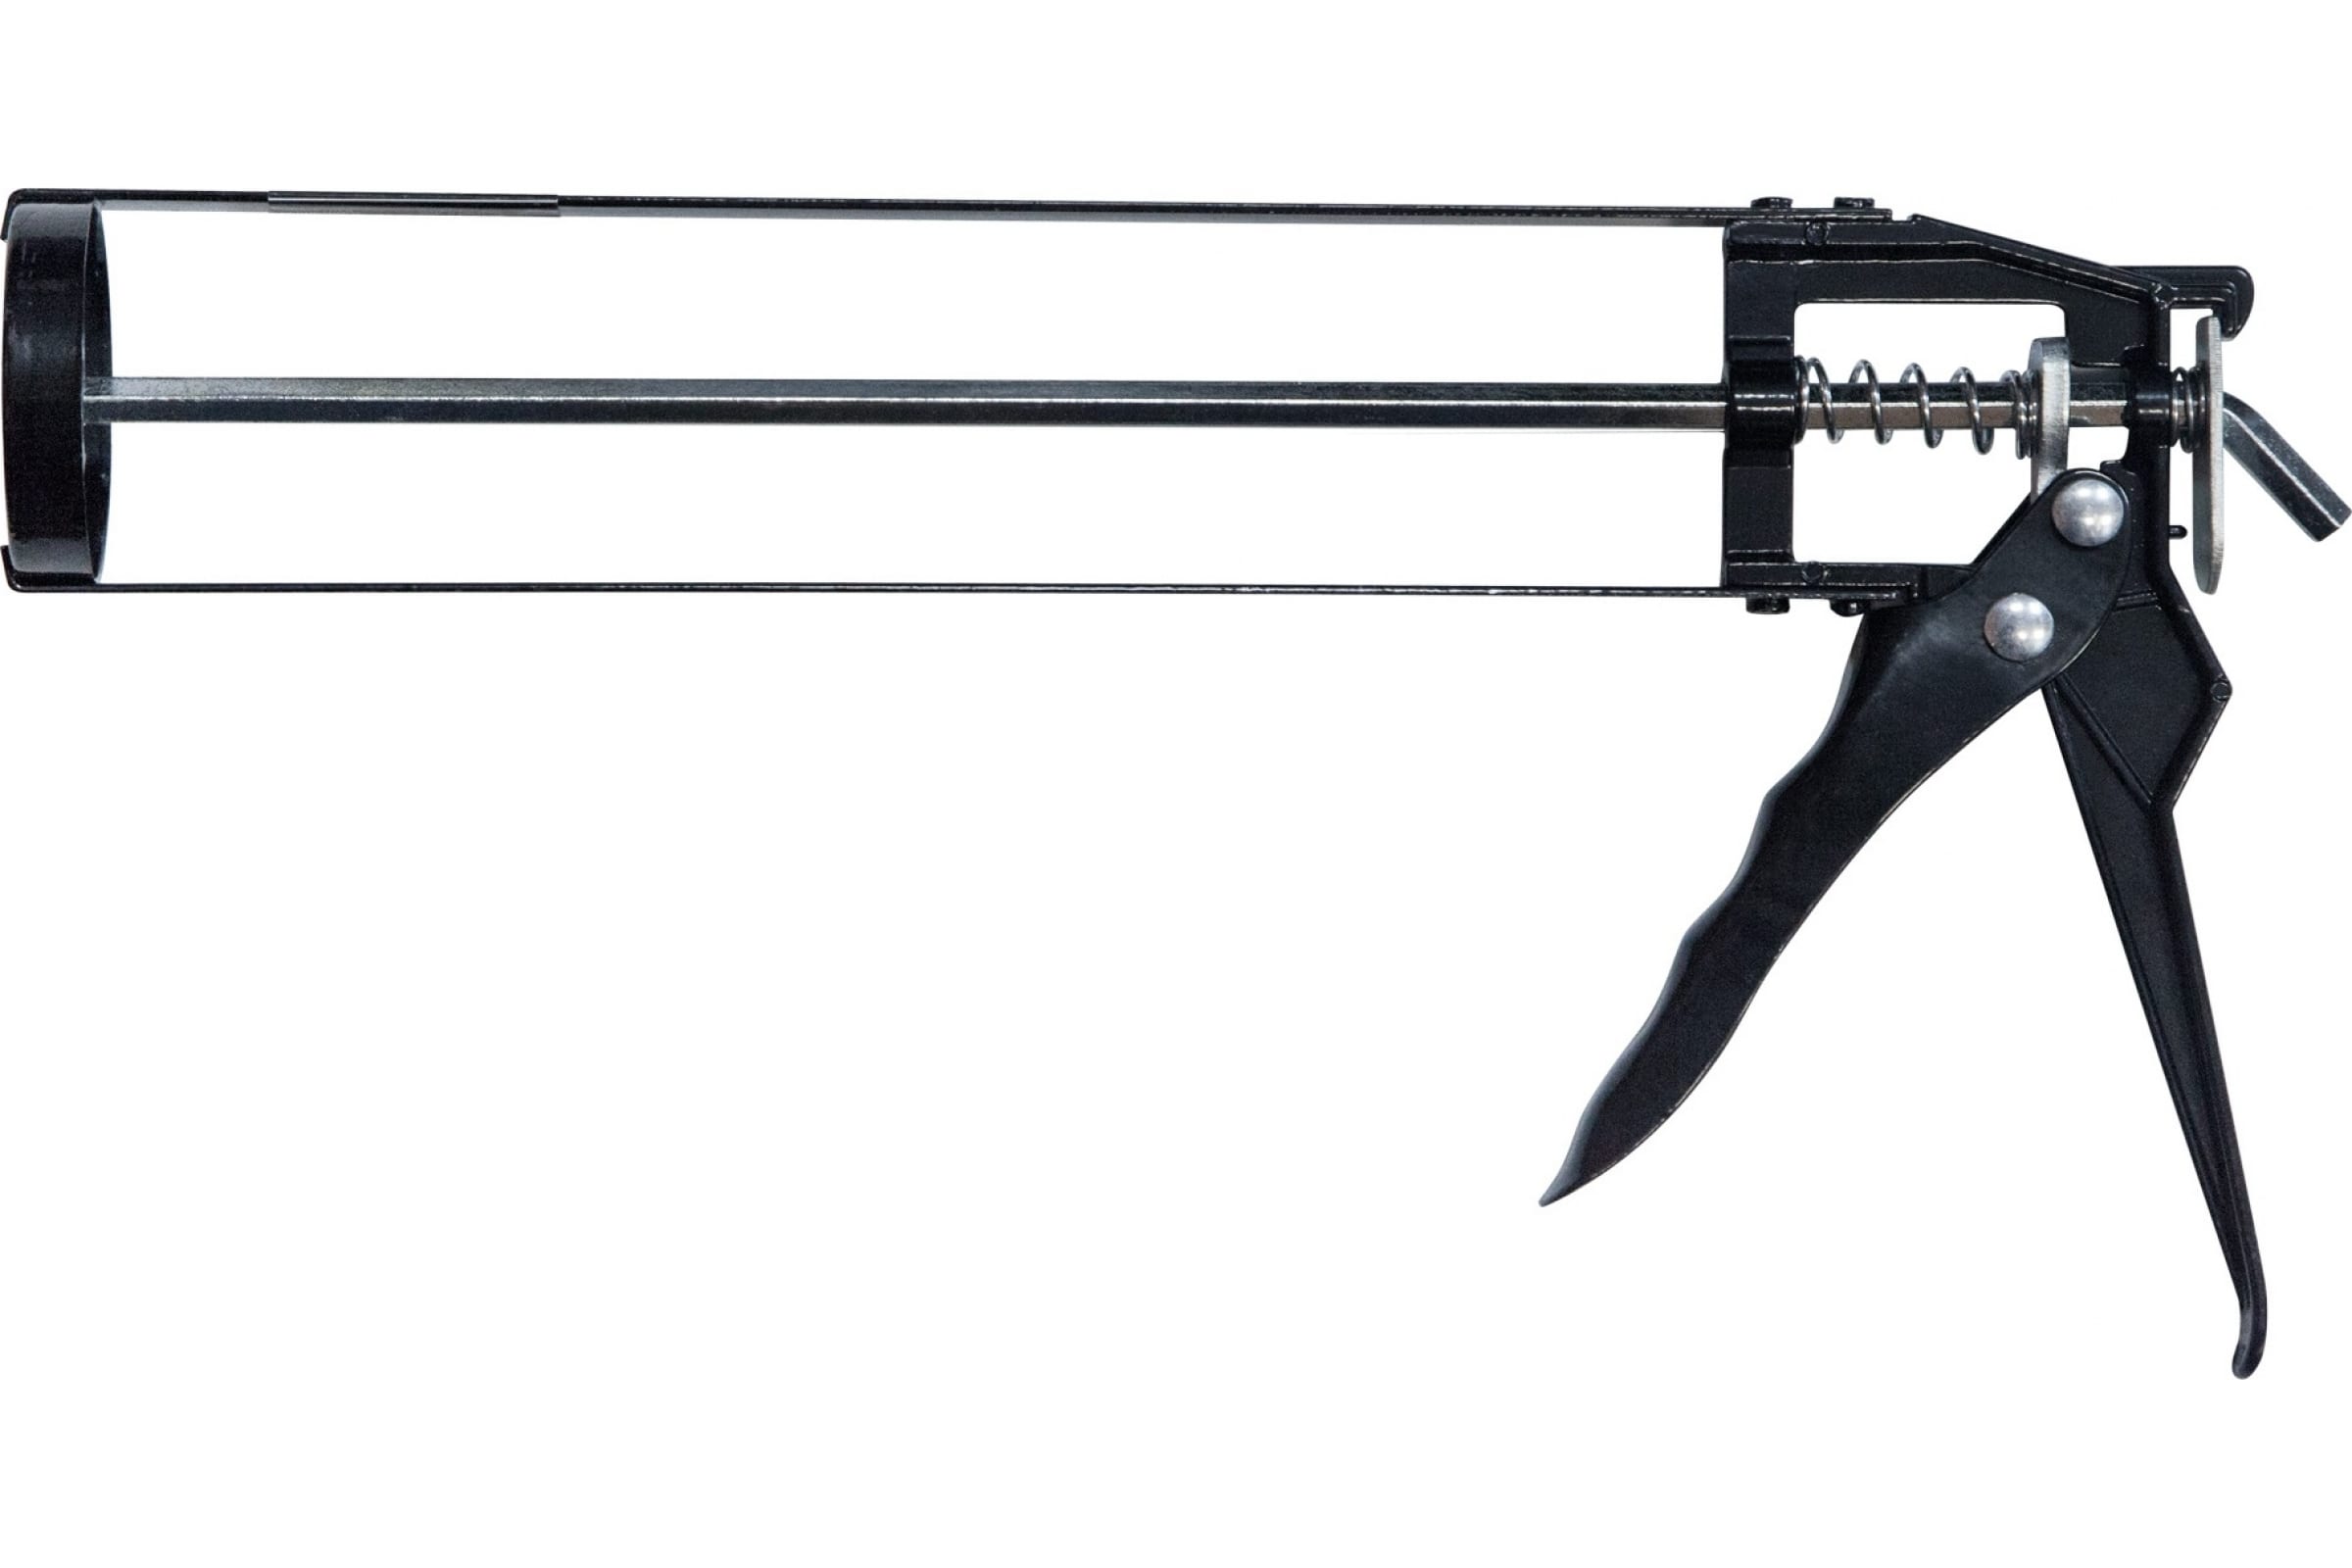 Blast Пистолет для герметика скелетный Basic 591000 скелетный пистолет для герметика кобальт